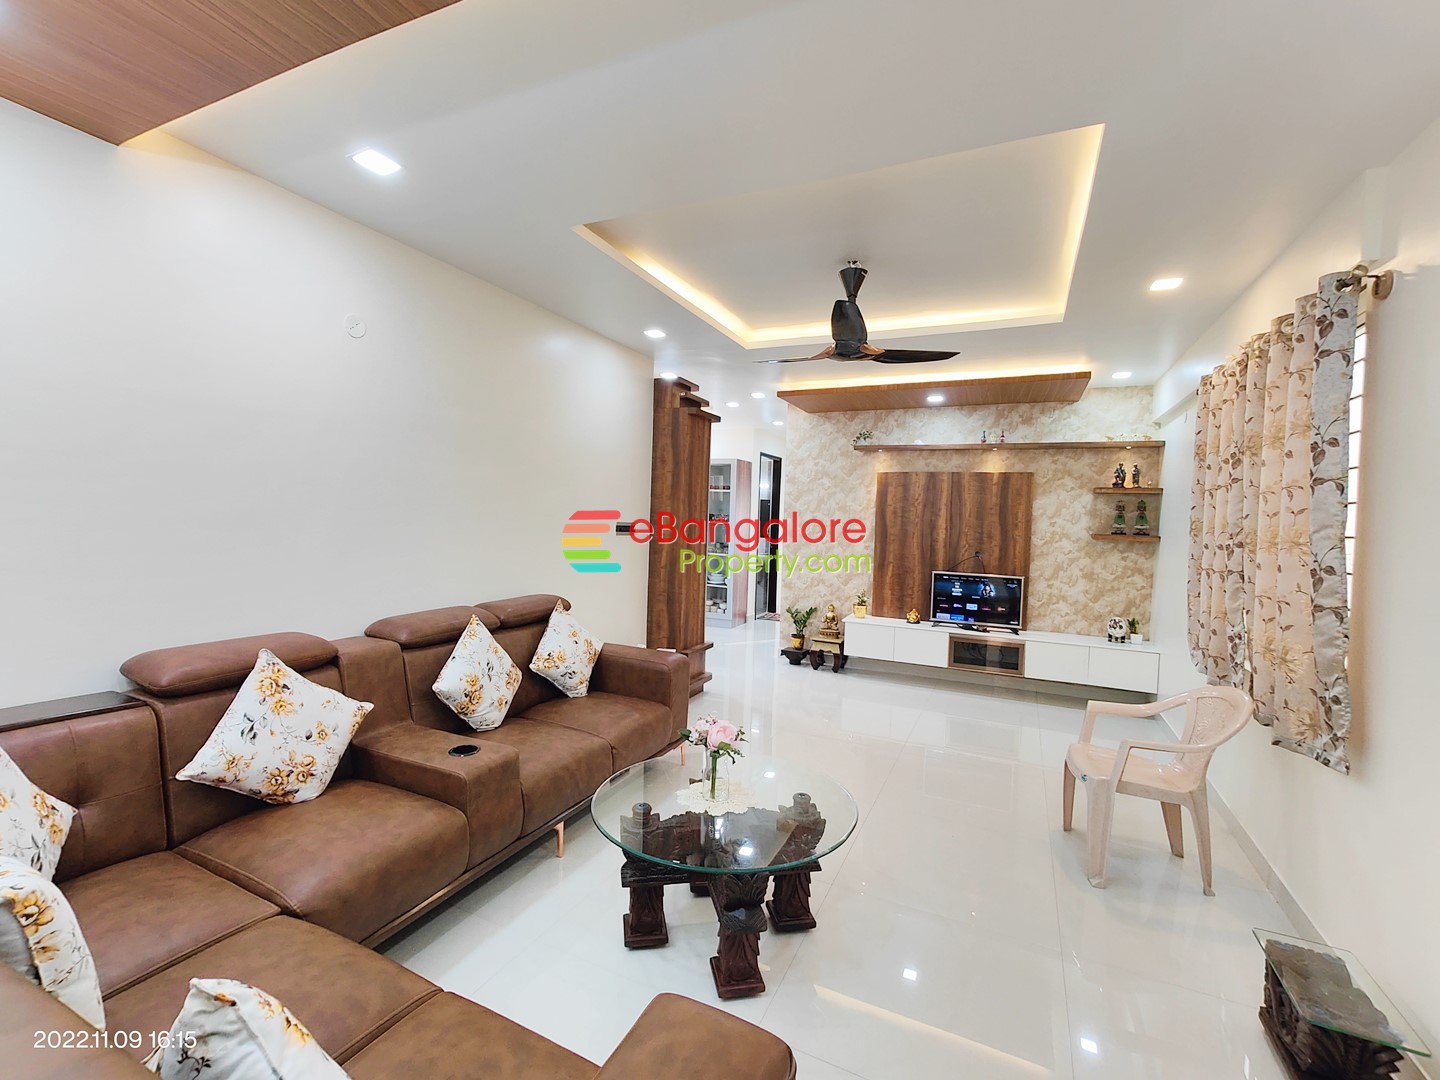 Thanisandra Road – 3BHK Lavish Apartment For Sale with all Amenities – Nr Bharatiya City